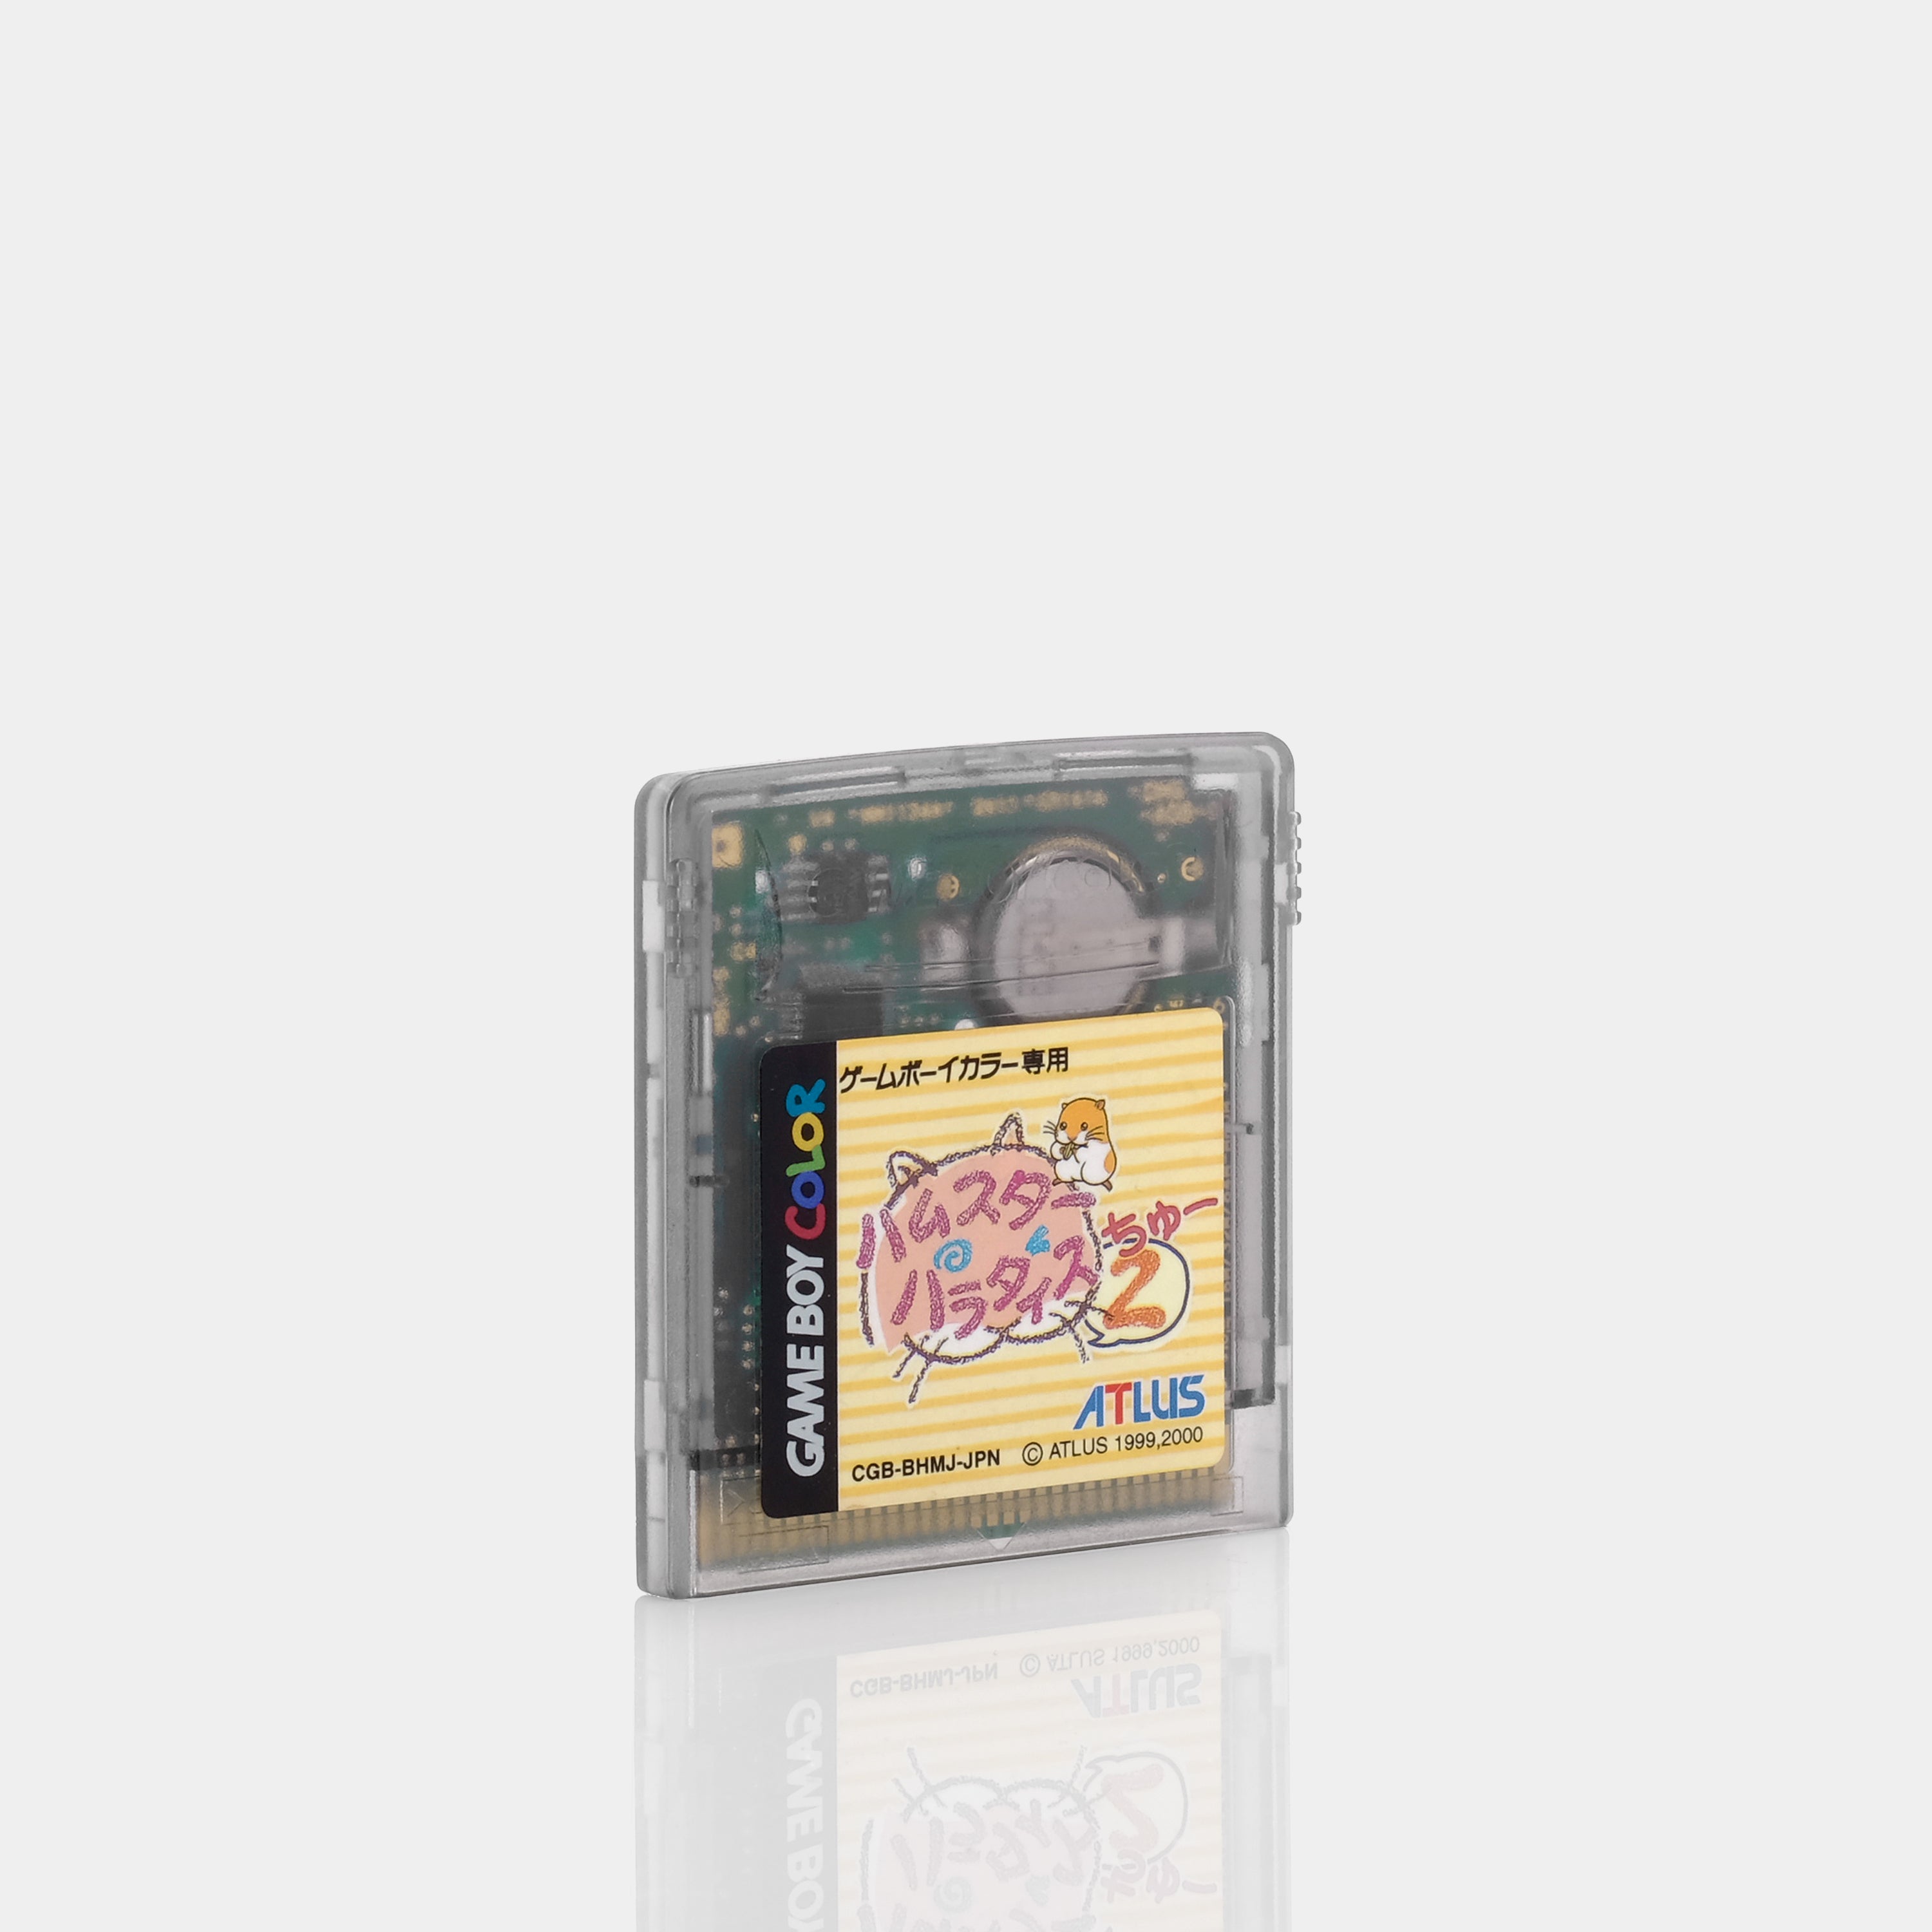 Hamster Paradise 2 ハムスターパラダイス 2 (Japanese Version) Game Boy Color Game